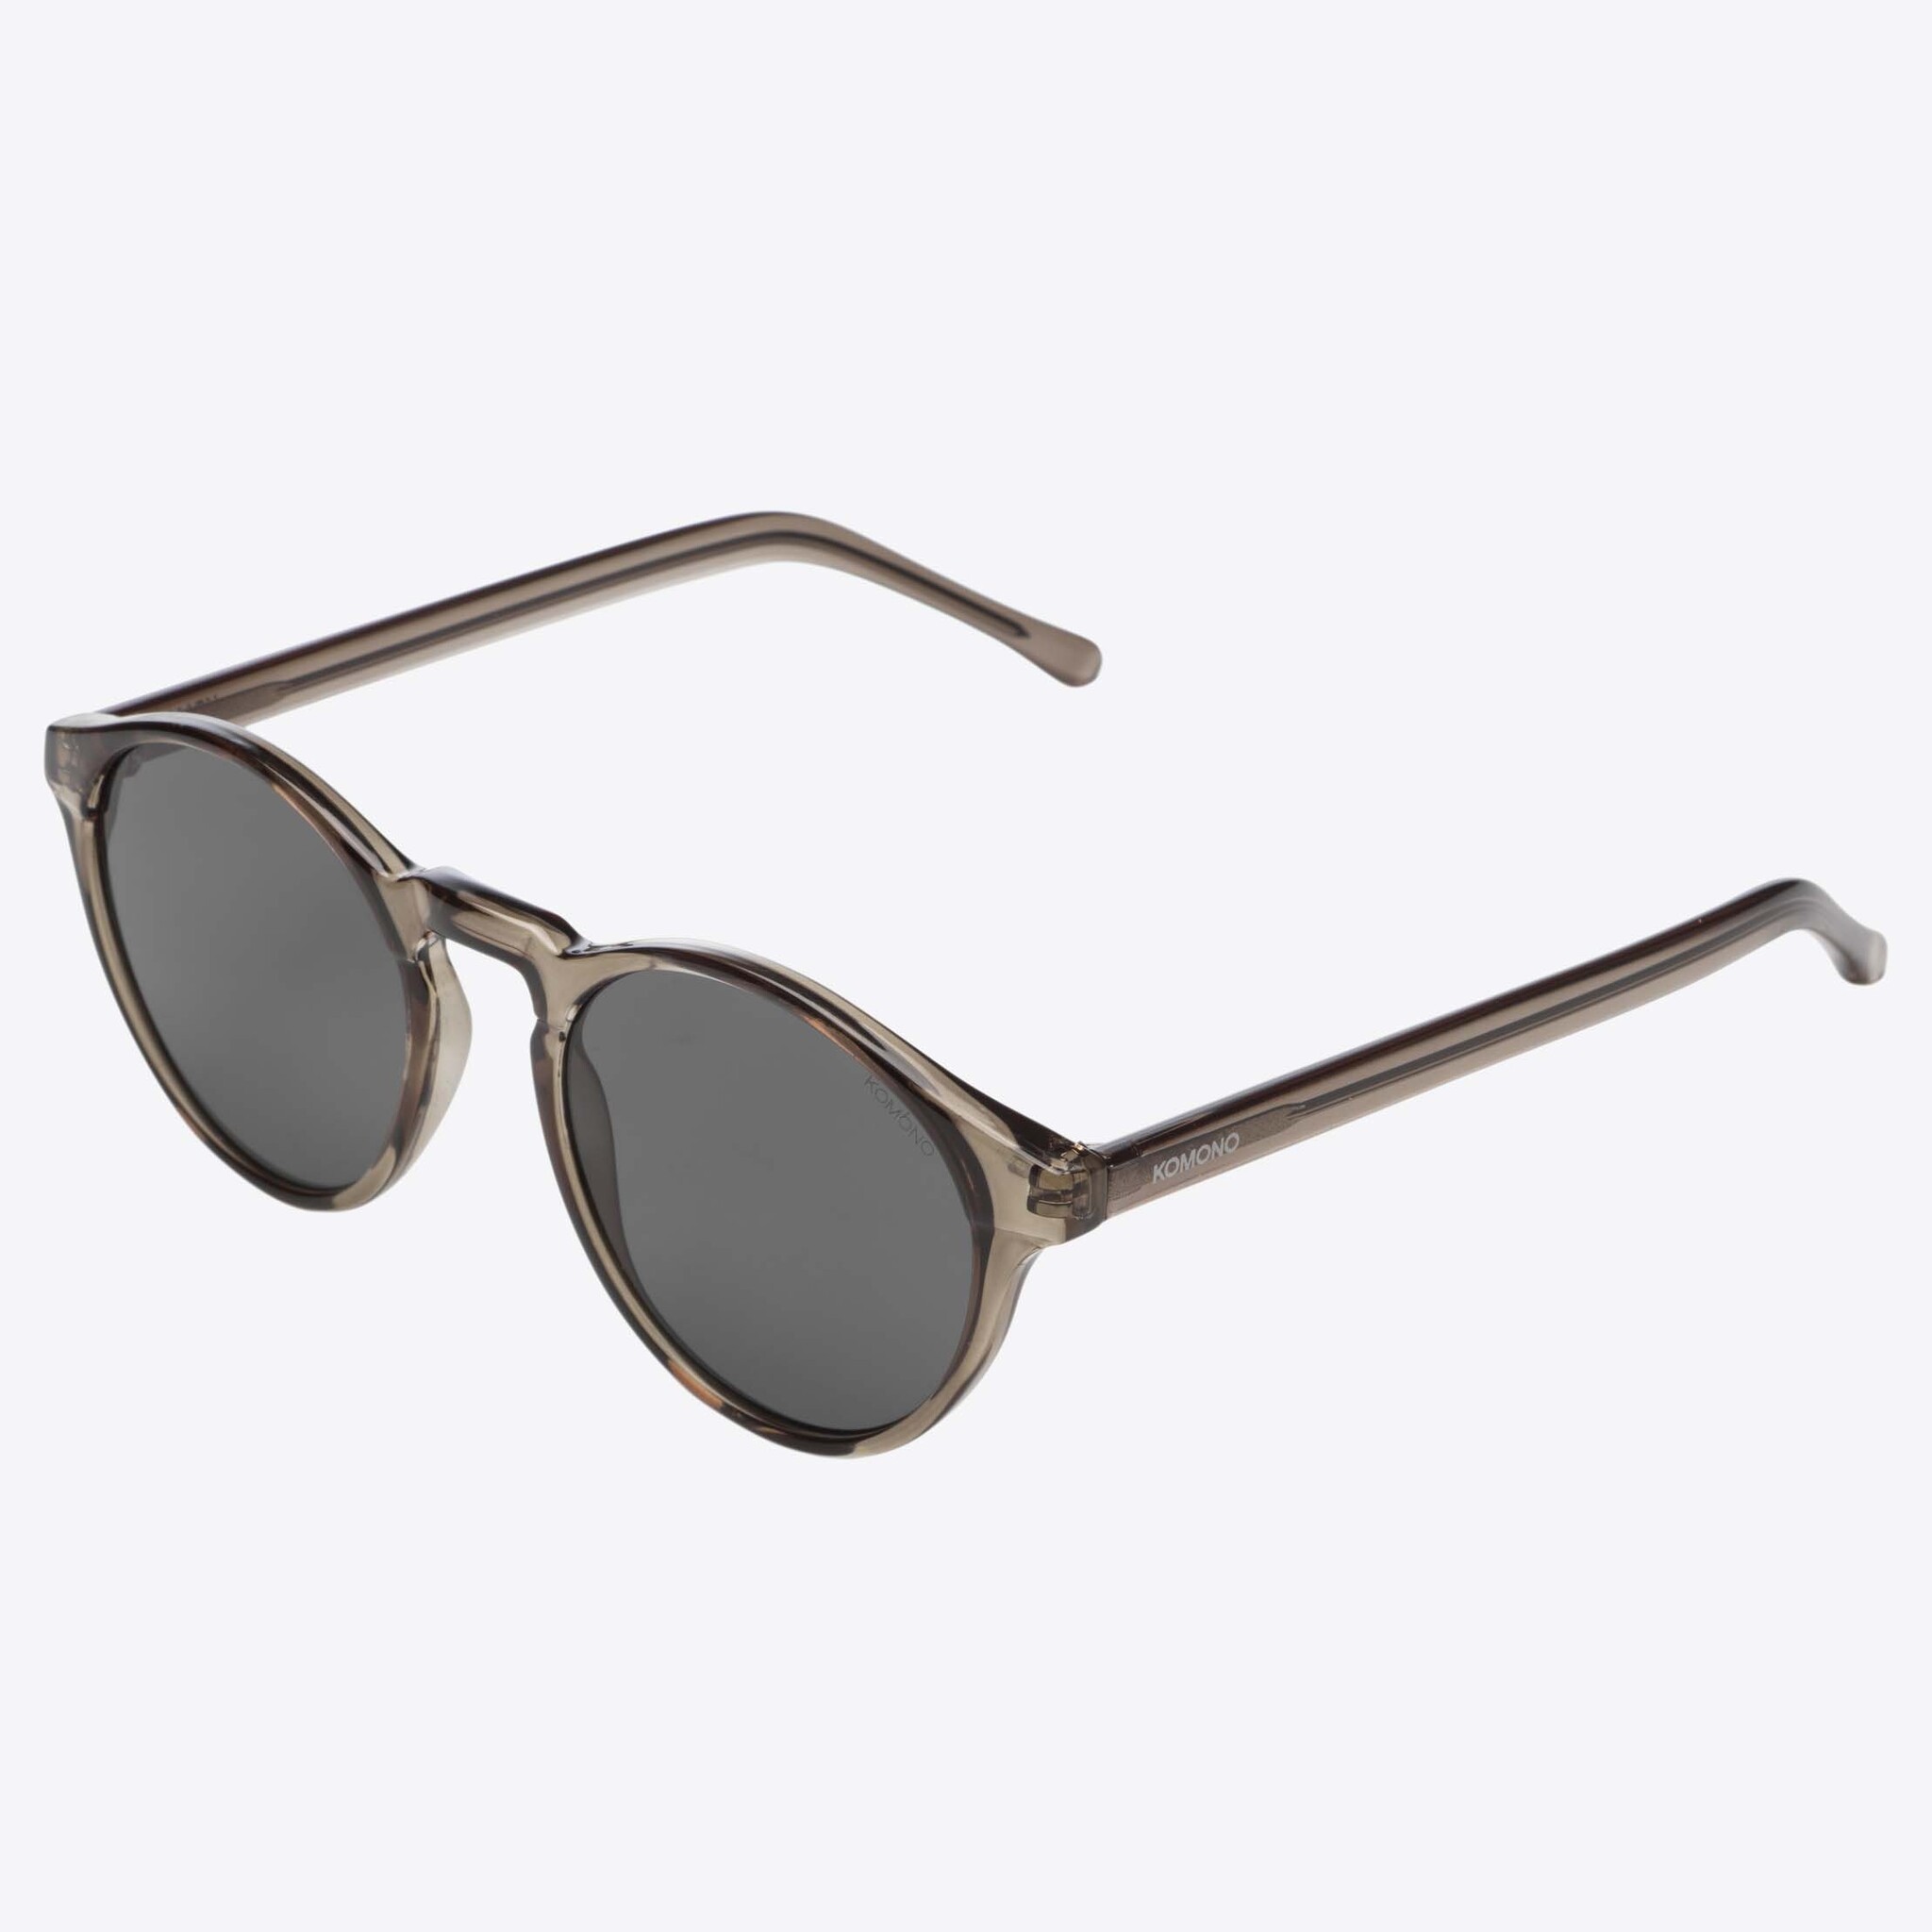 Komono Devon Musk sunglasses - side